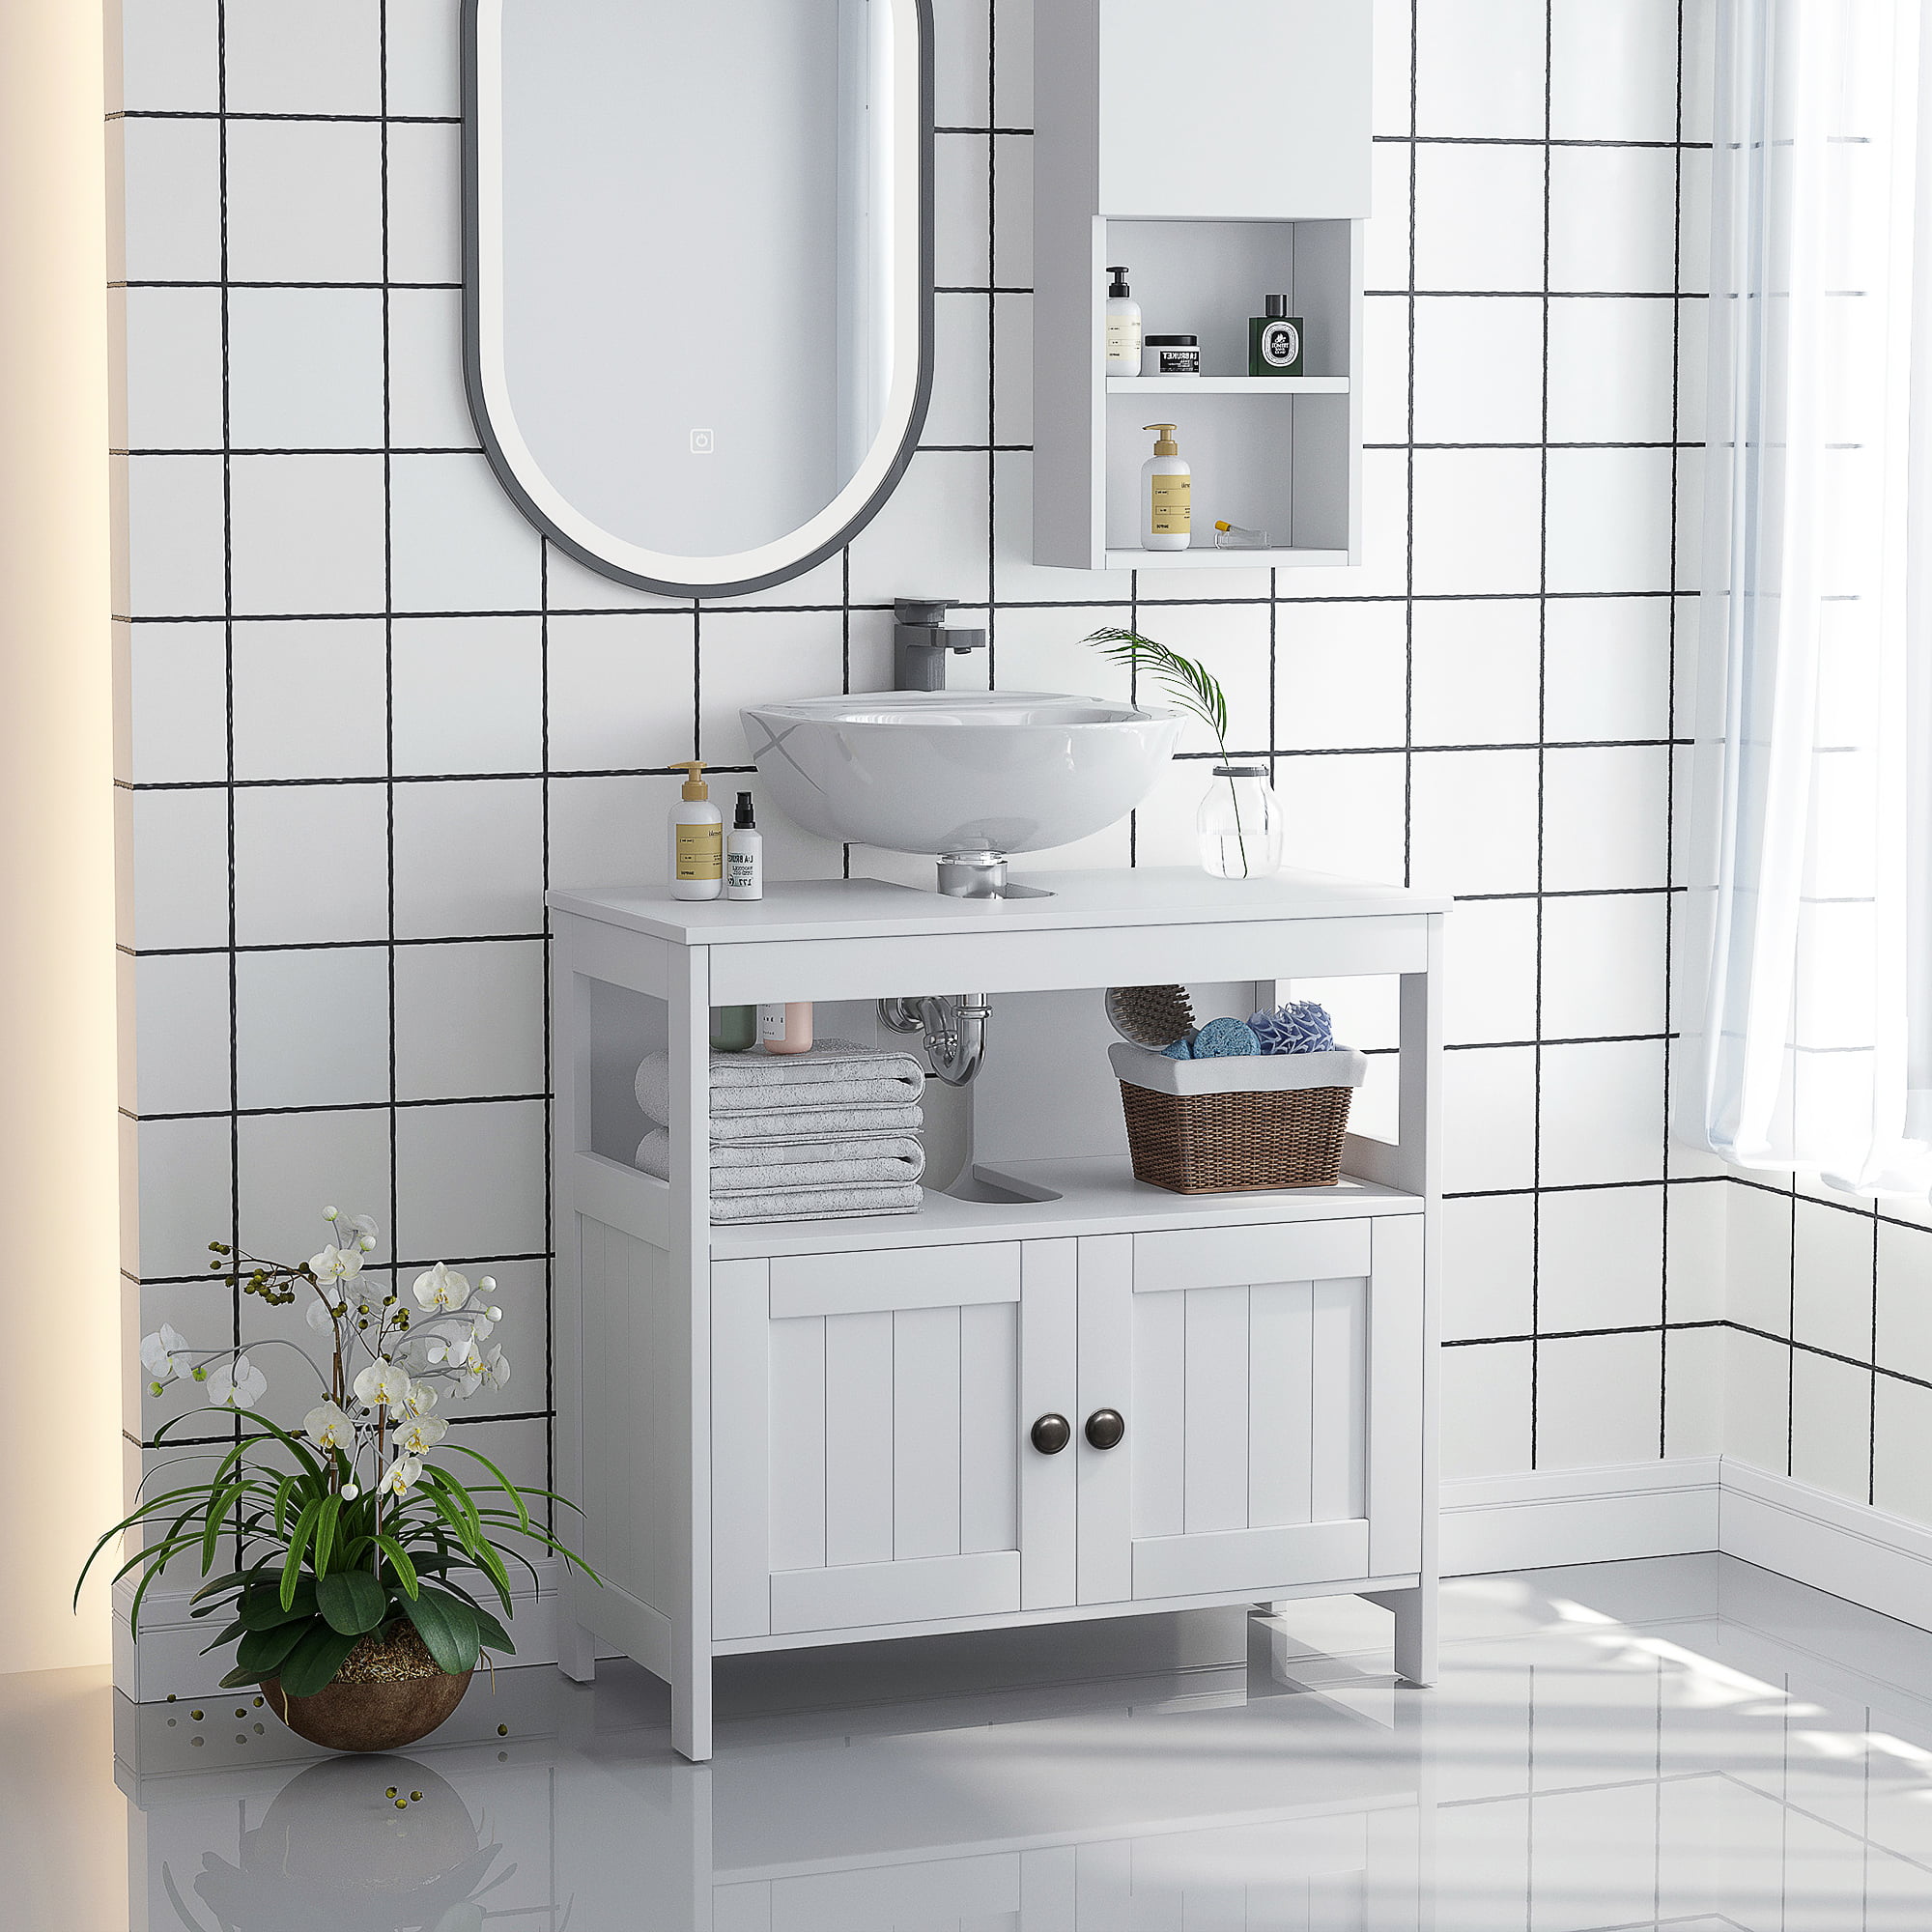 Kcelarec Under Sink Storage Cabinet with 2 Doors and Shelf, Pedestal Sink Bathroom Vanity Cabinet, Space Saver Organizer, White